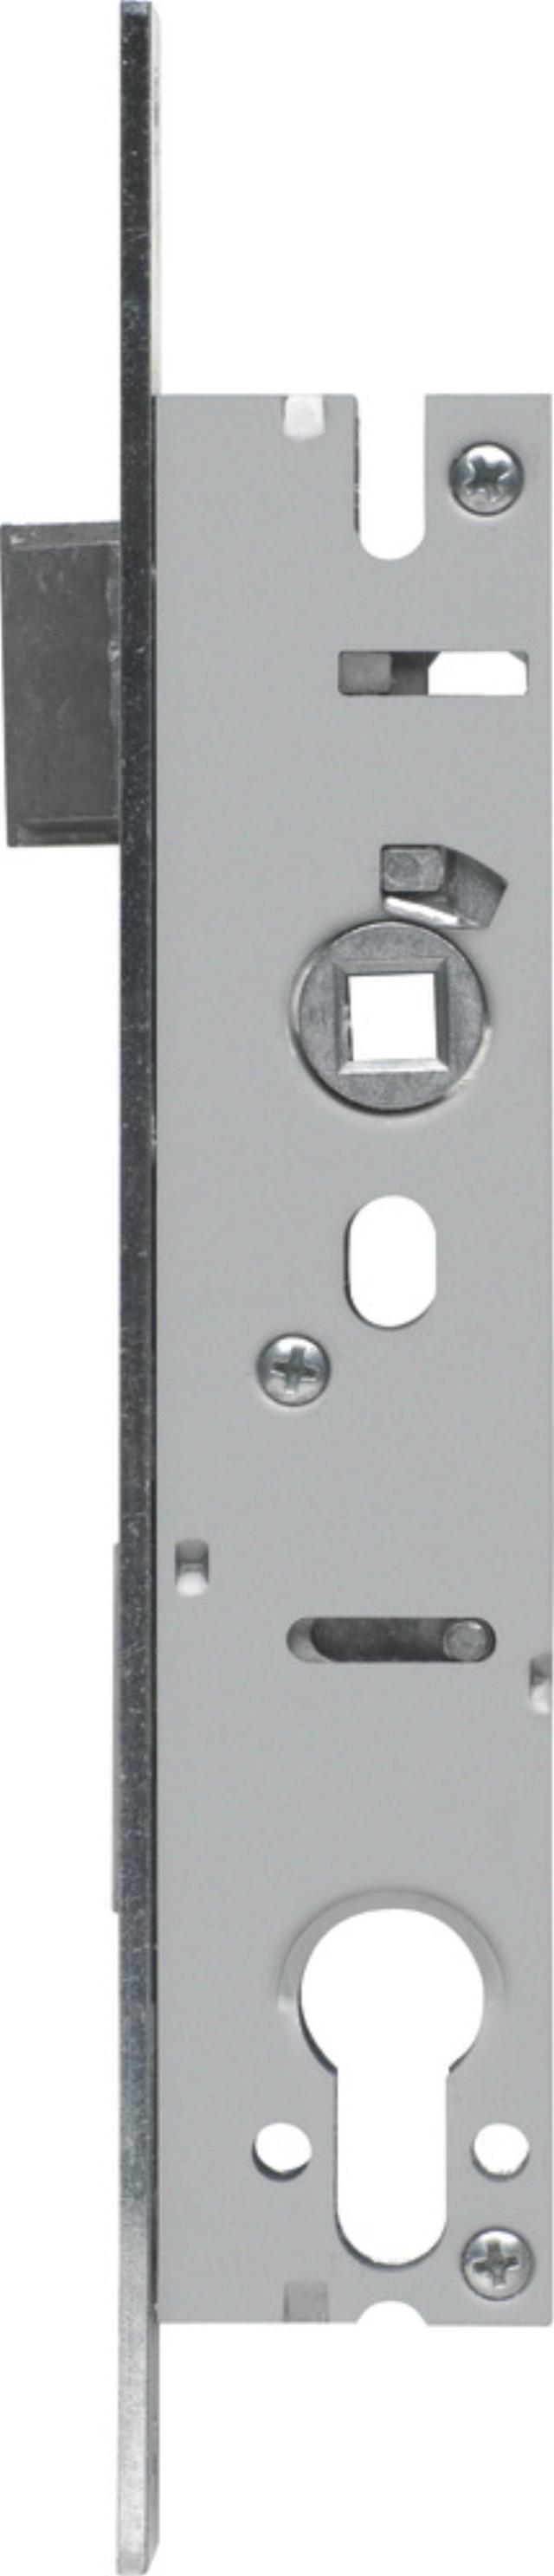 Abus narrow profile lock box, mandrel 25 mm.